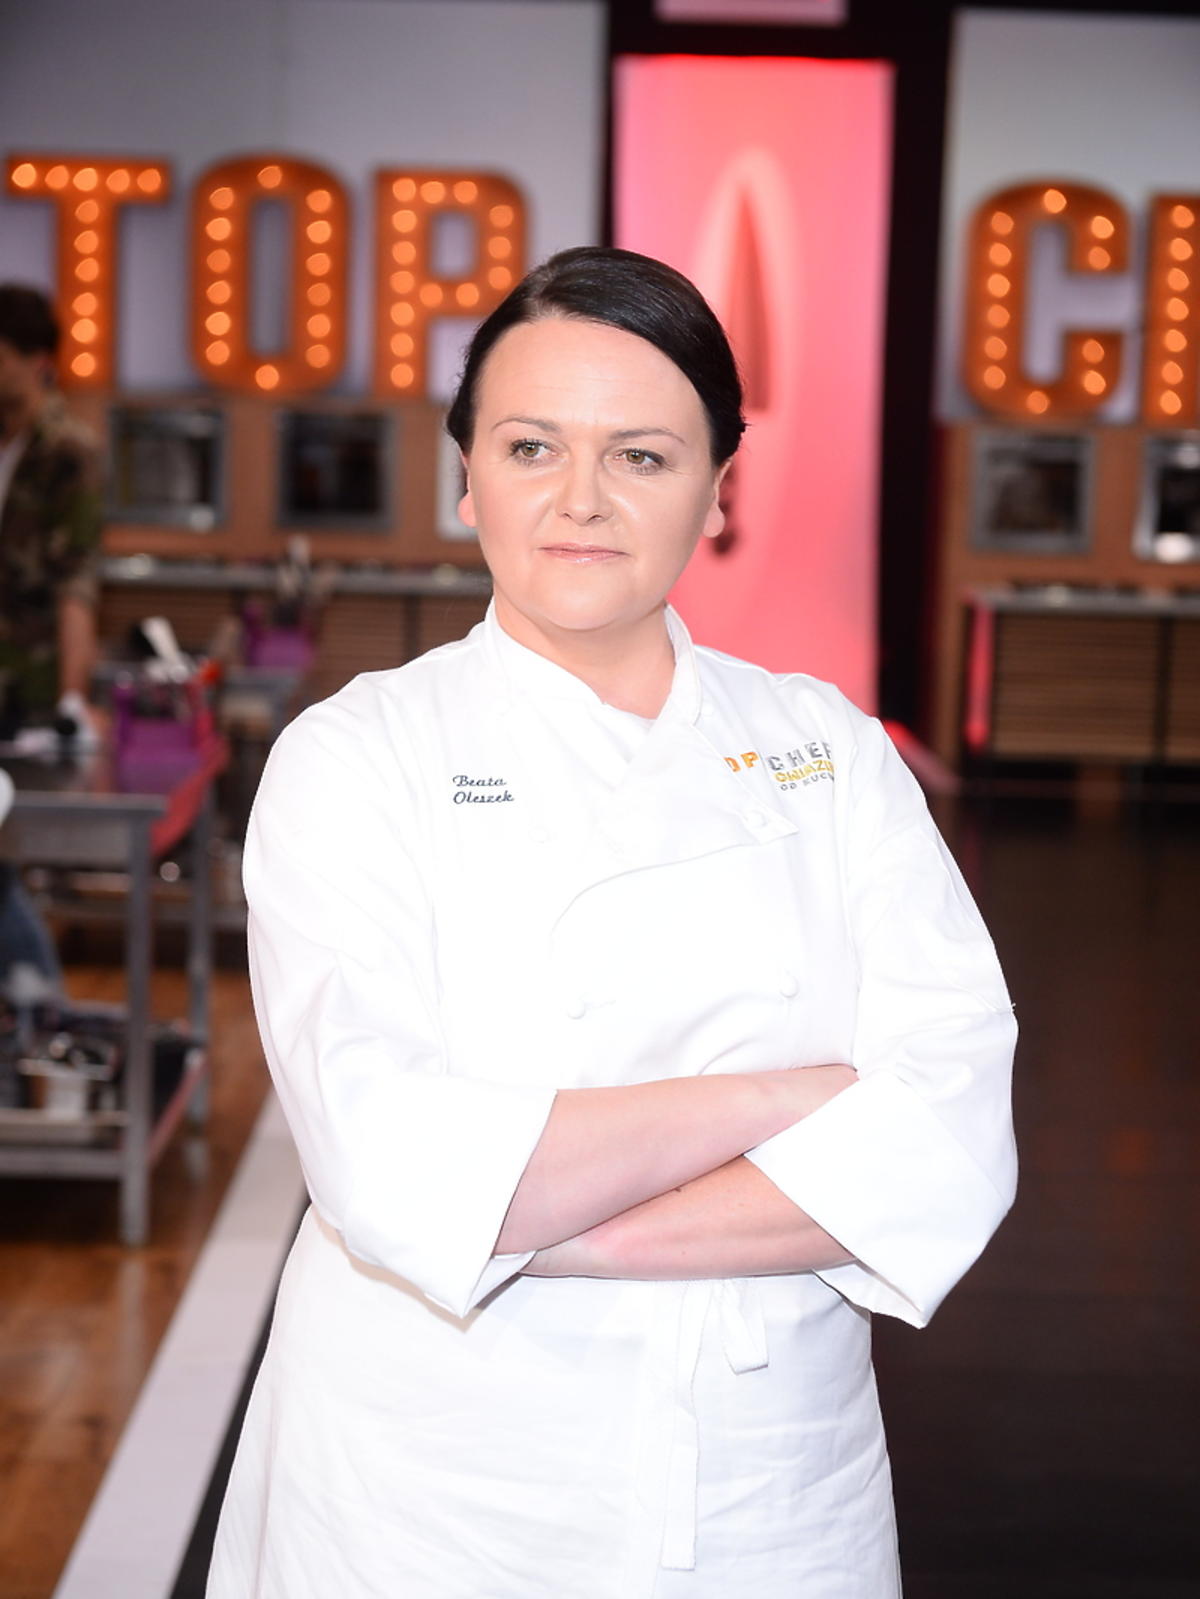 Beata Oleszek, Top Chef Gwiazdy od kuchni